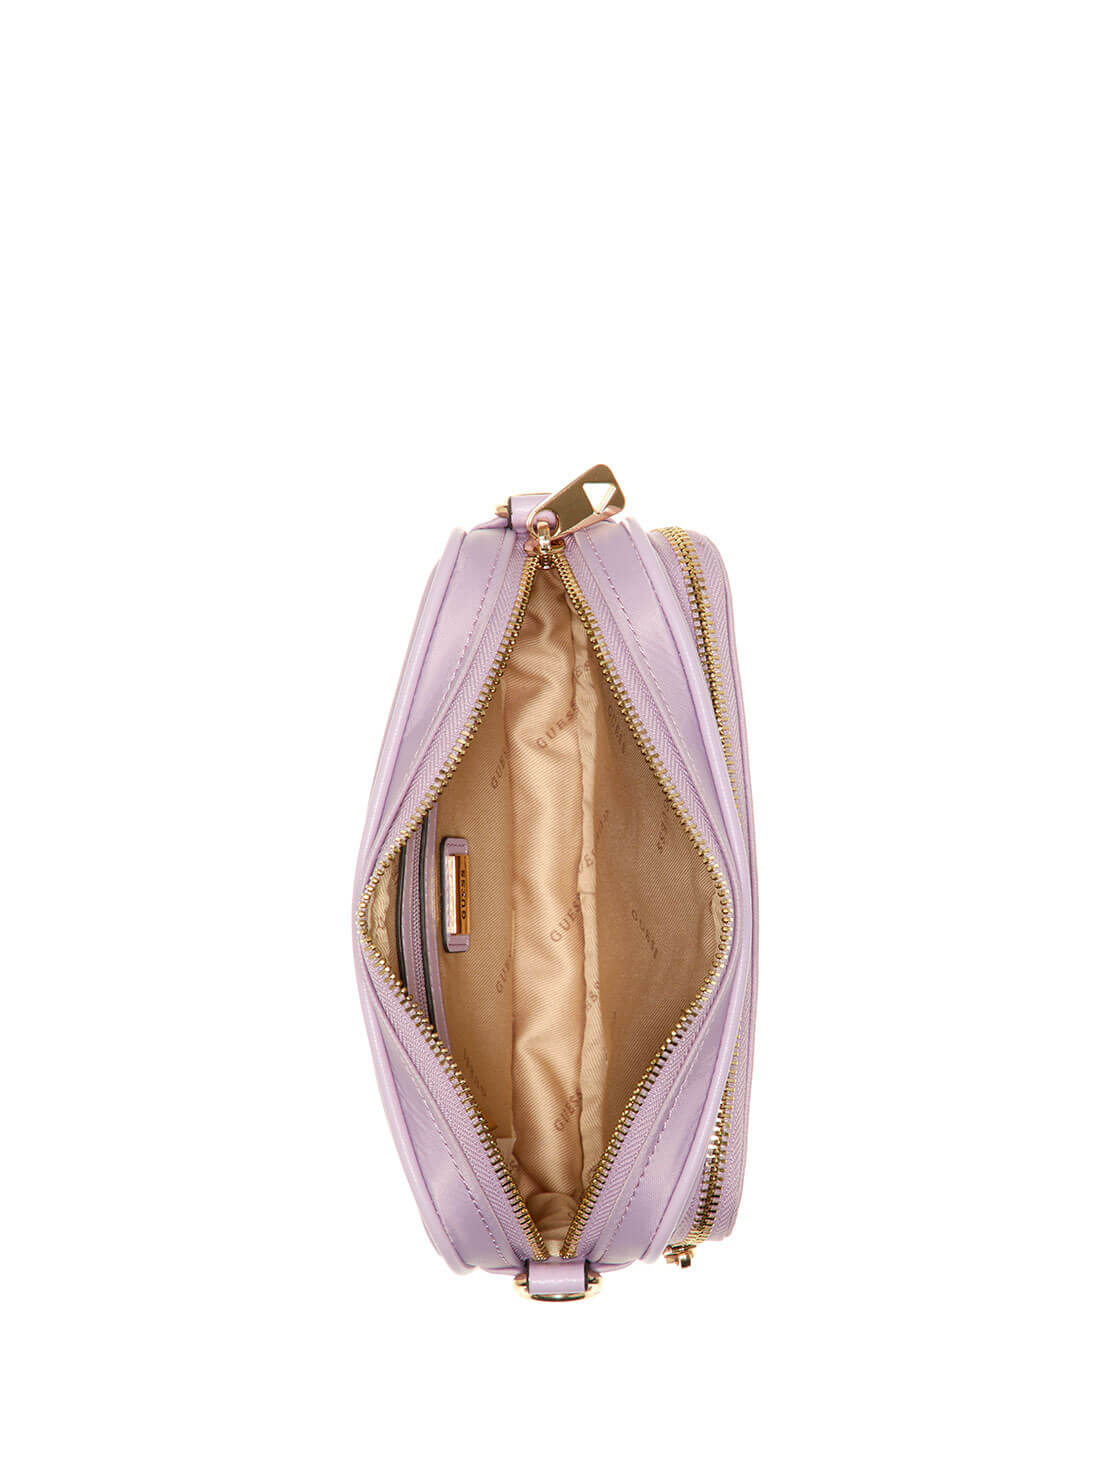 Light Purple Little Bay Crossbody Bag | GUESS Women's Handbags | inside view